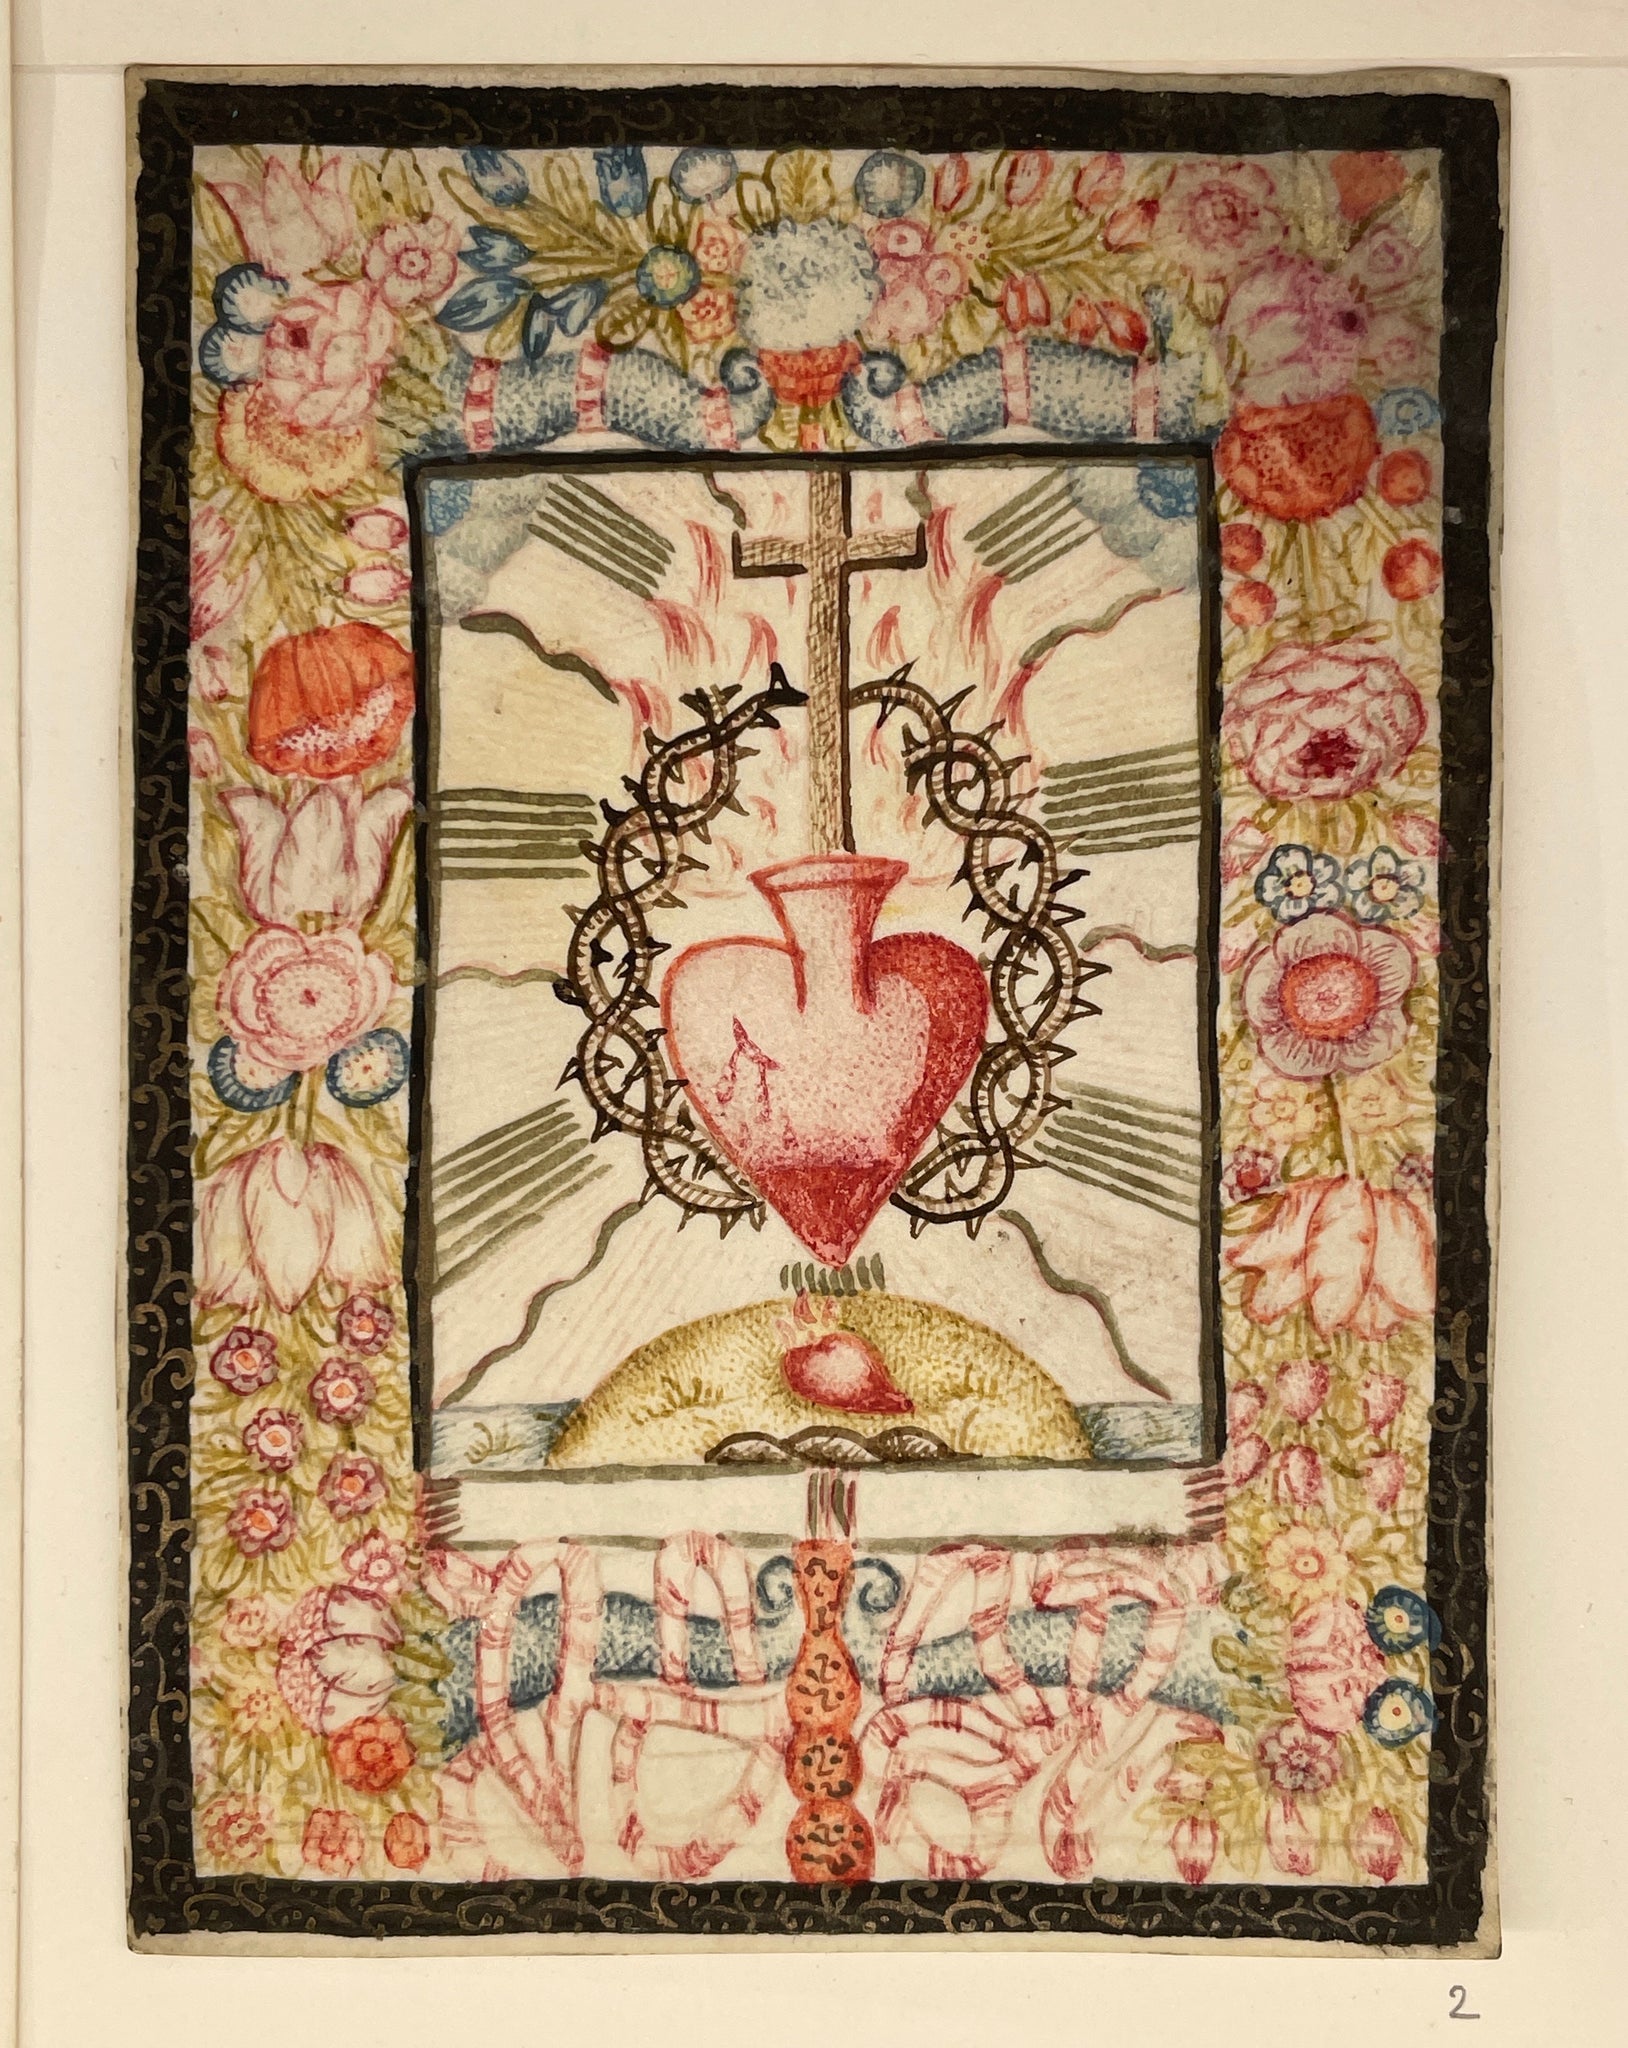 #2 - Handpainted Devotional Prayer Card, ca. 1820